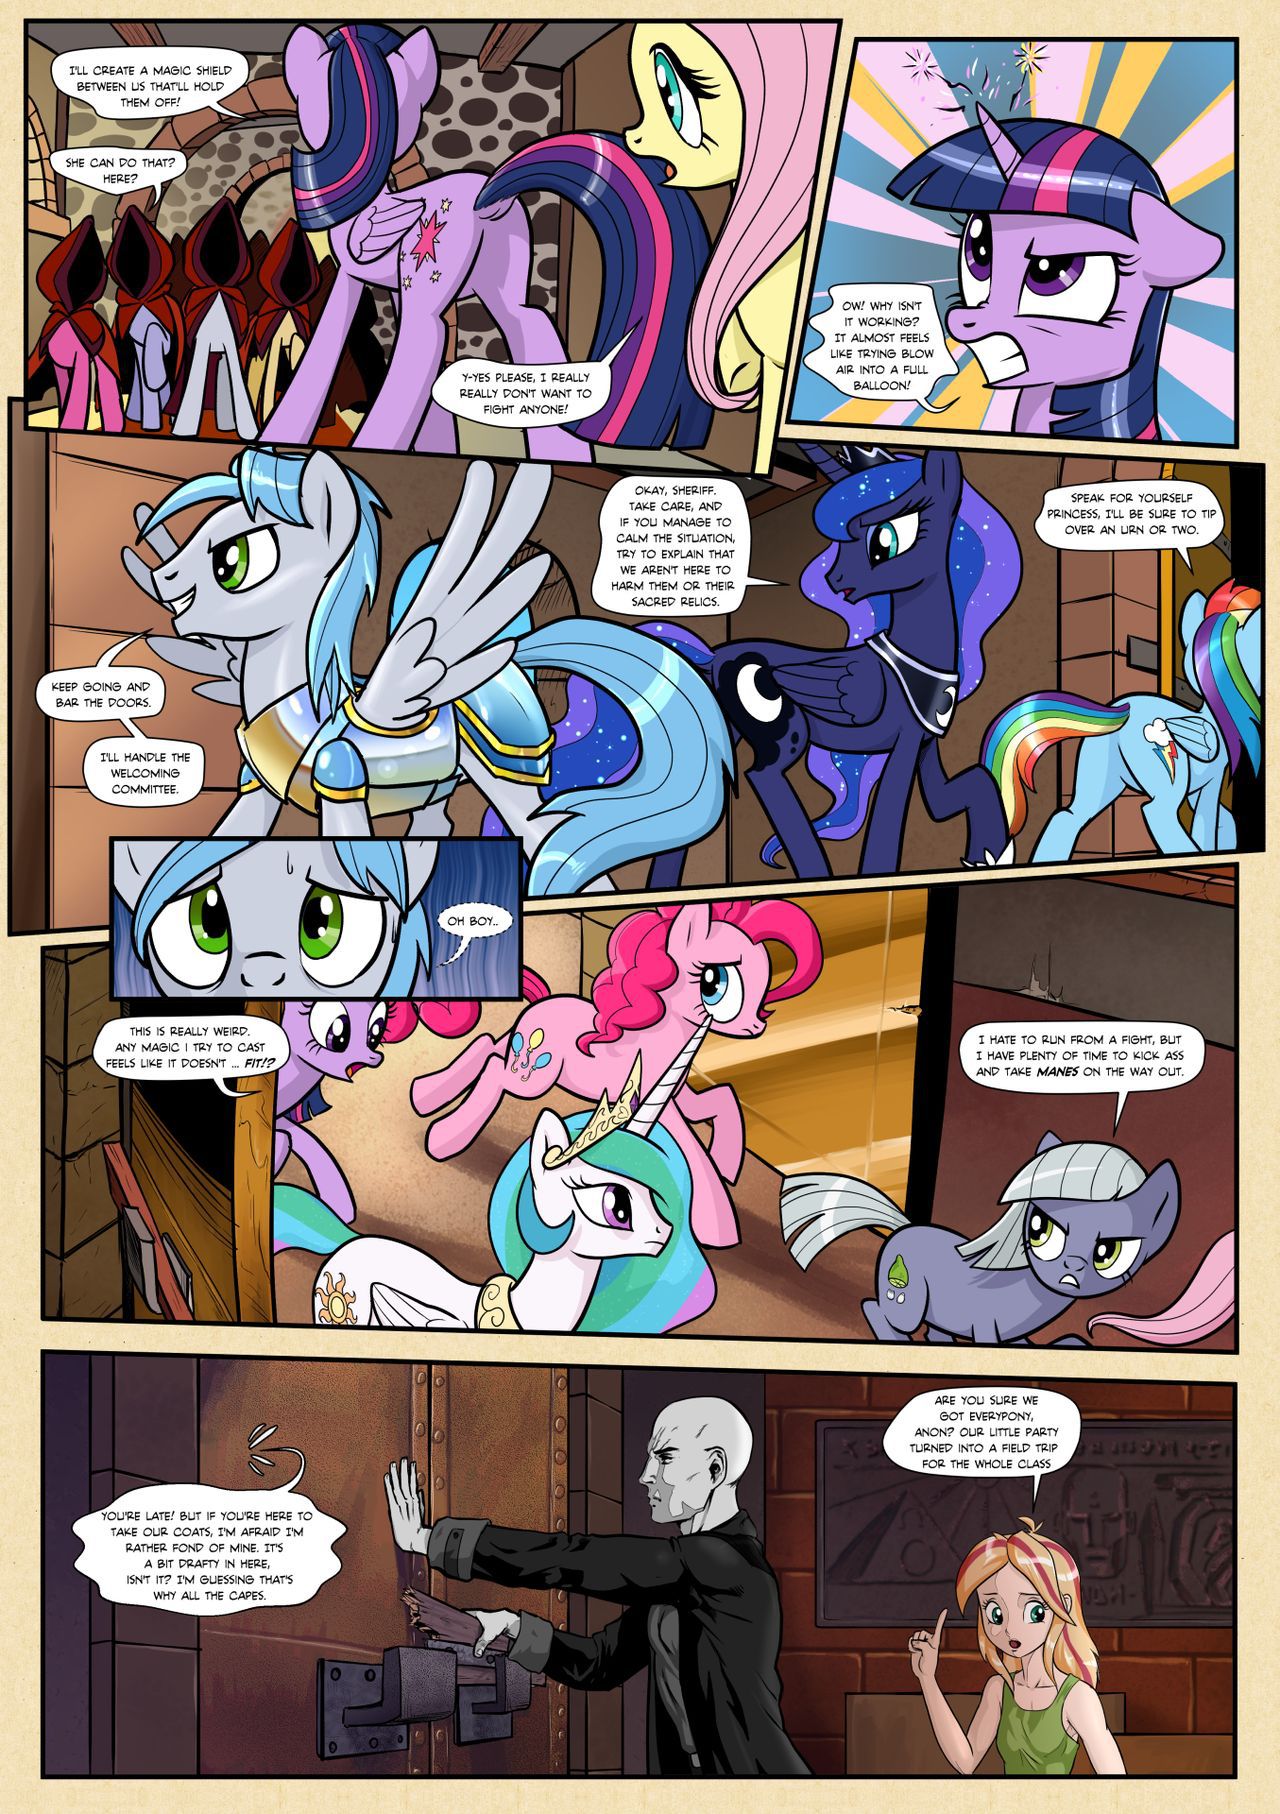 [Pencils] Anon's Pie Adventures (My Little Pony: Friendship is Magic) [In-Progress] 233